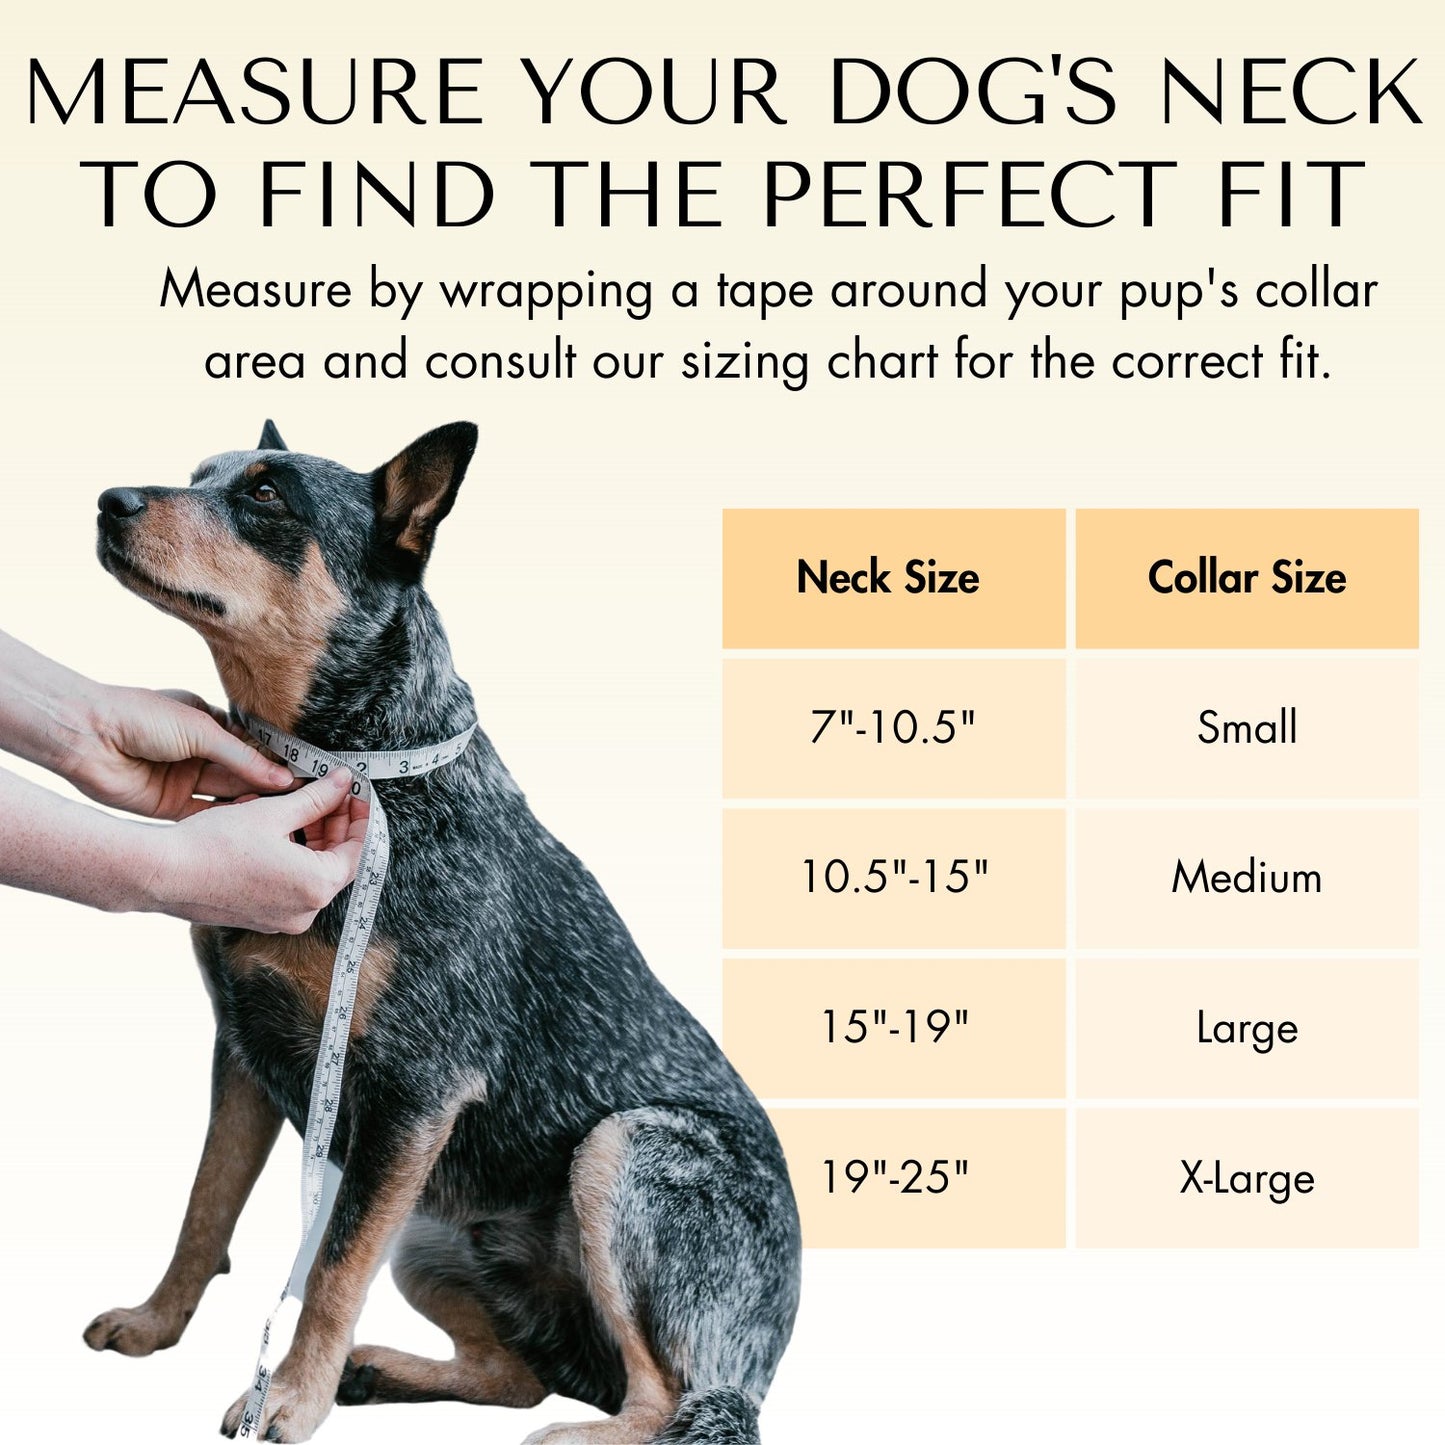 Collars - Waterproof Pink & Purple Dog Collar - Stylish and Smell Free (Purple, Pink)